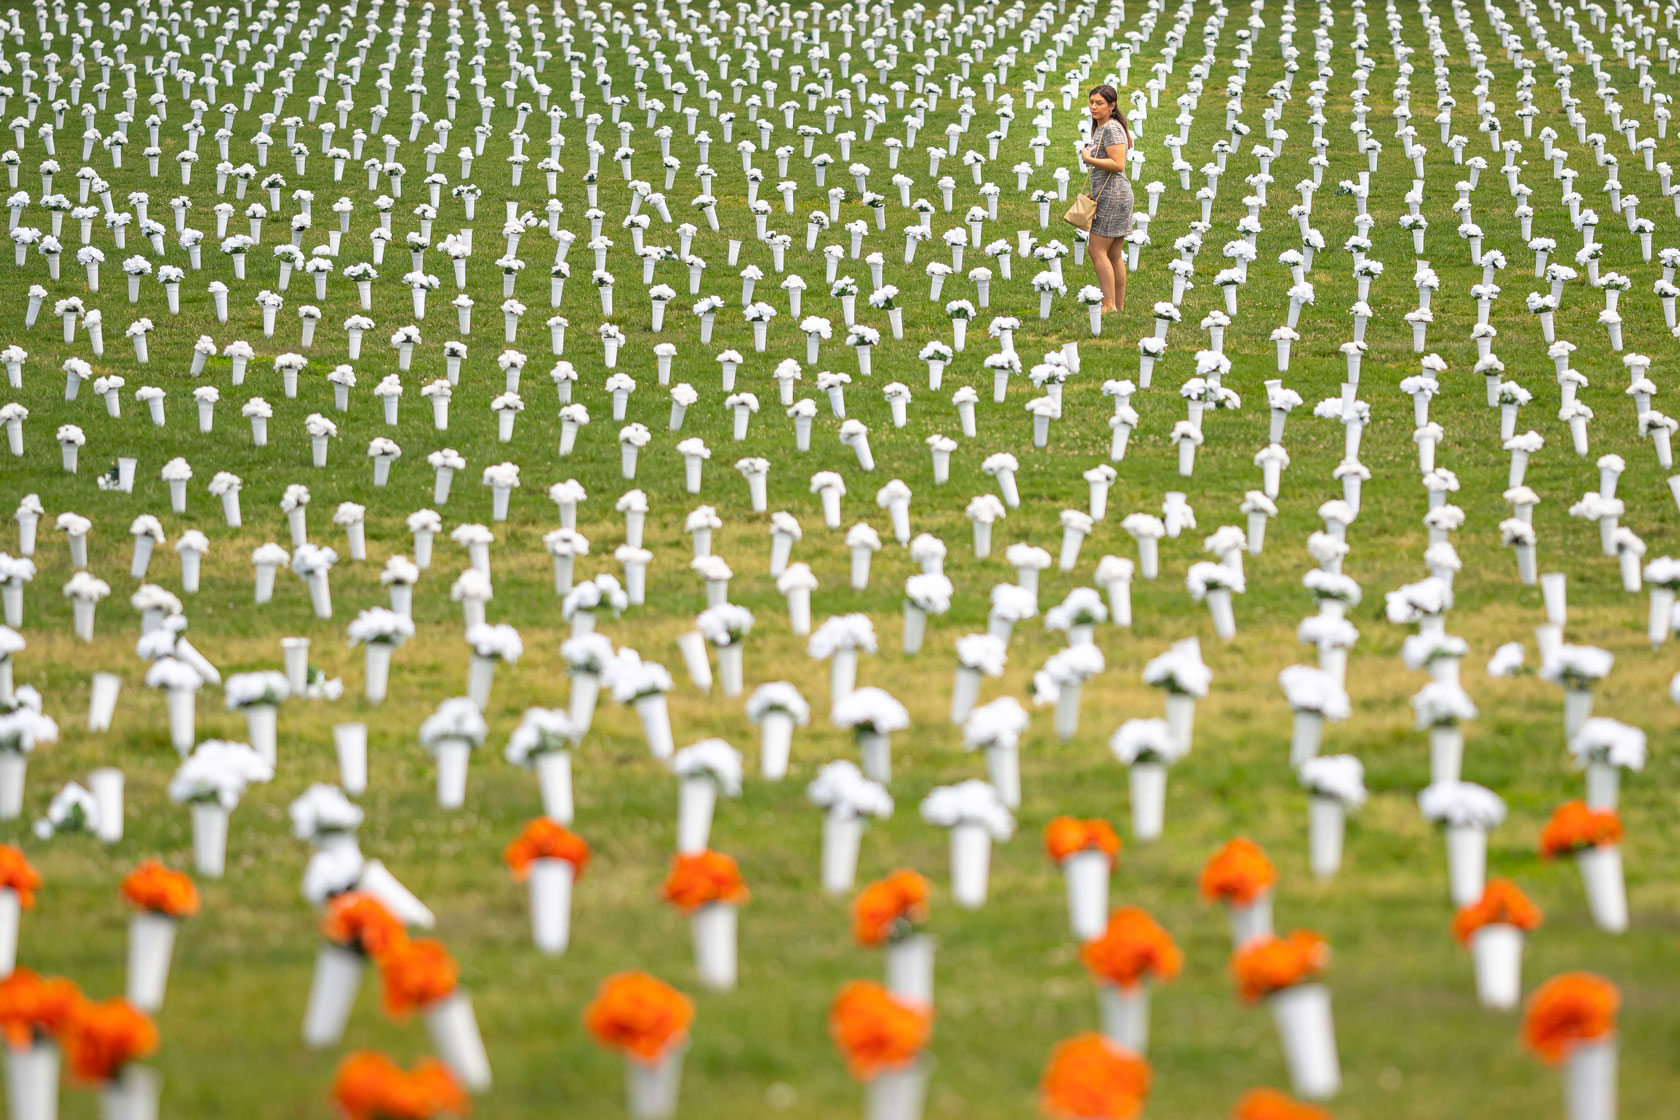 A woman walks through a field of flowers representing deaths from gun violence.